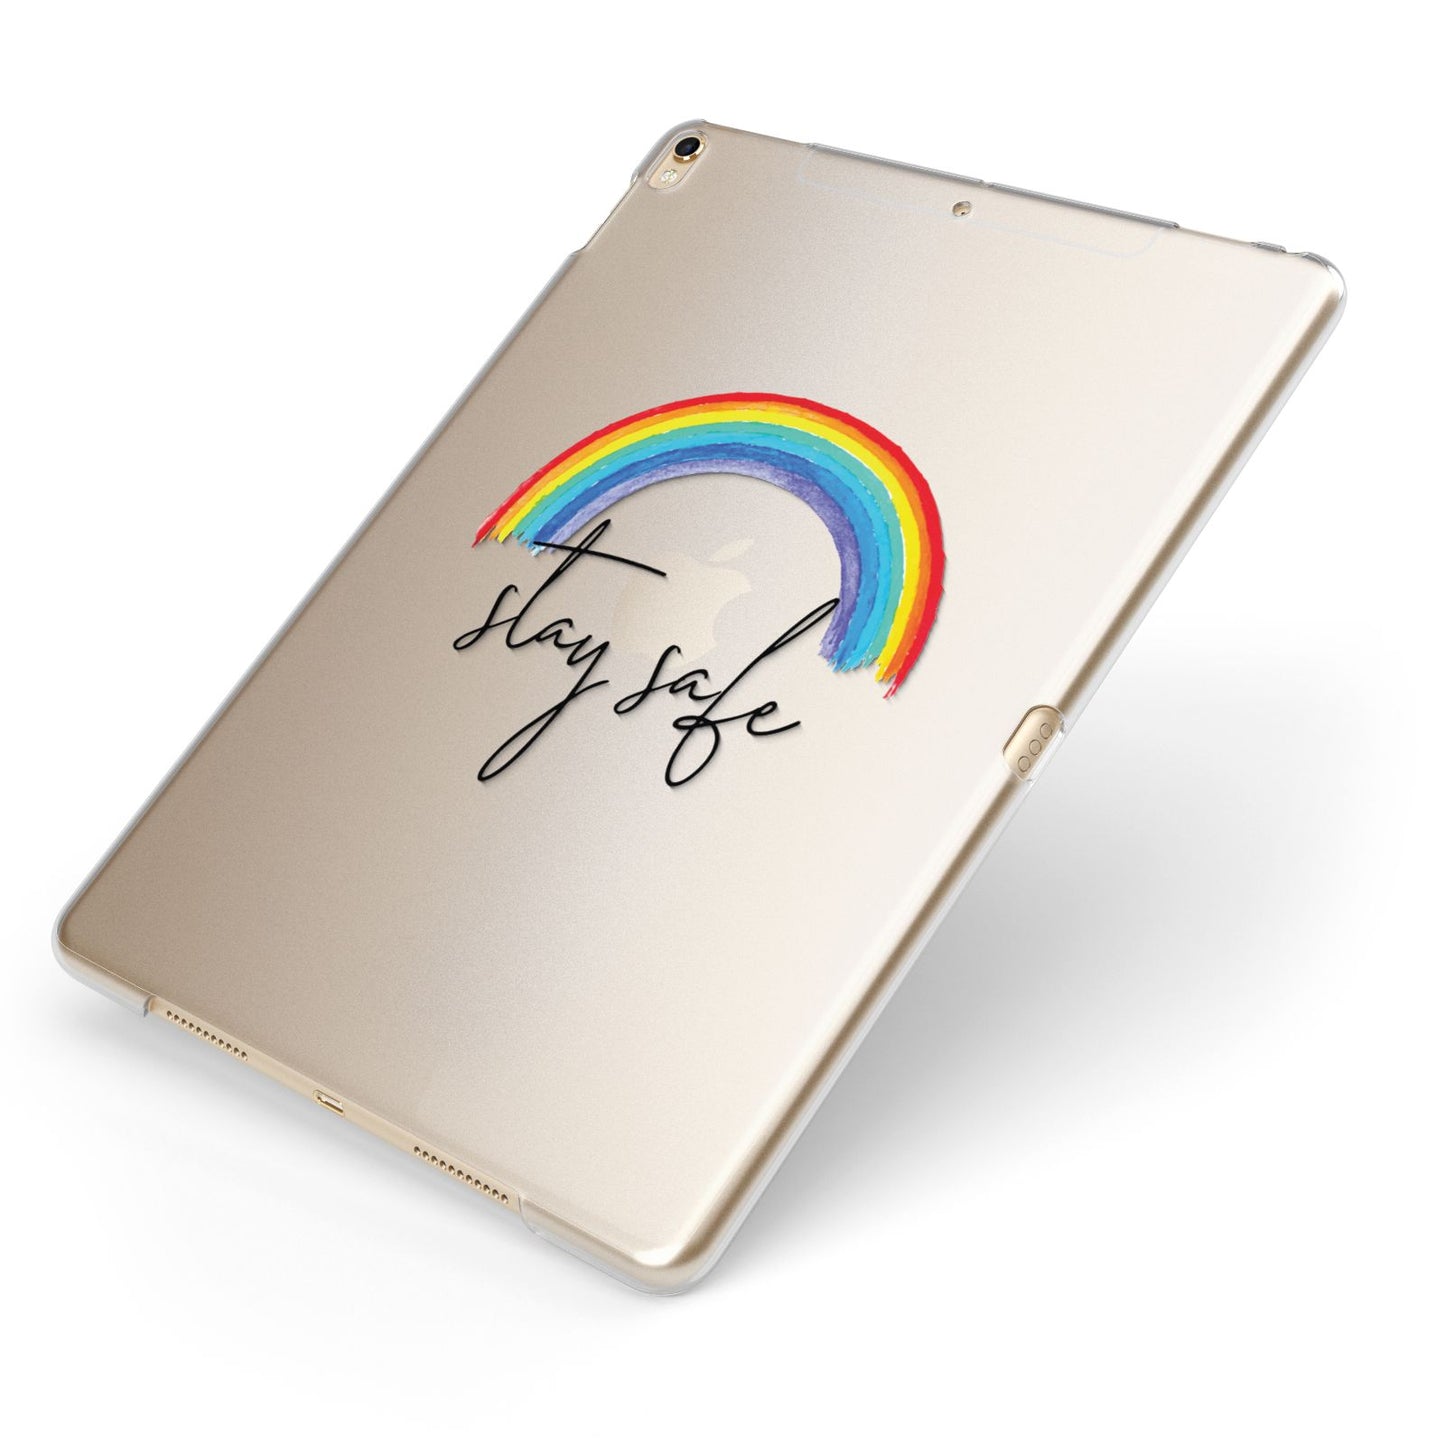 Stay Safe Rainbow Apple iPad Case on Gold iPad Side View